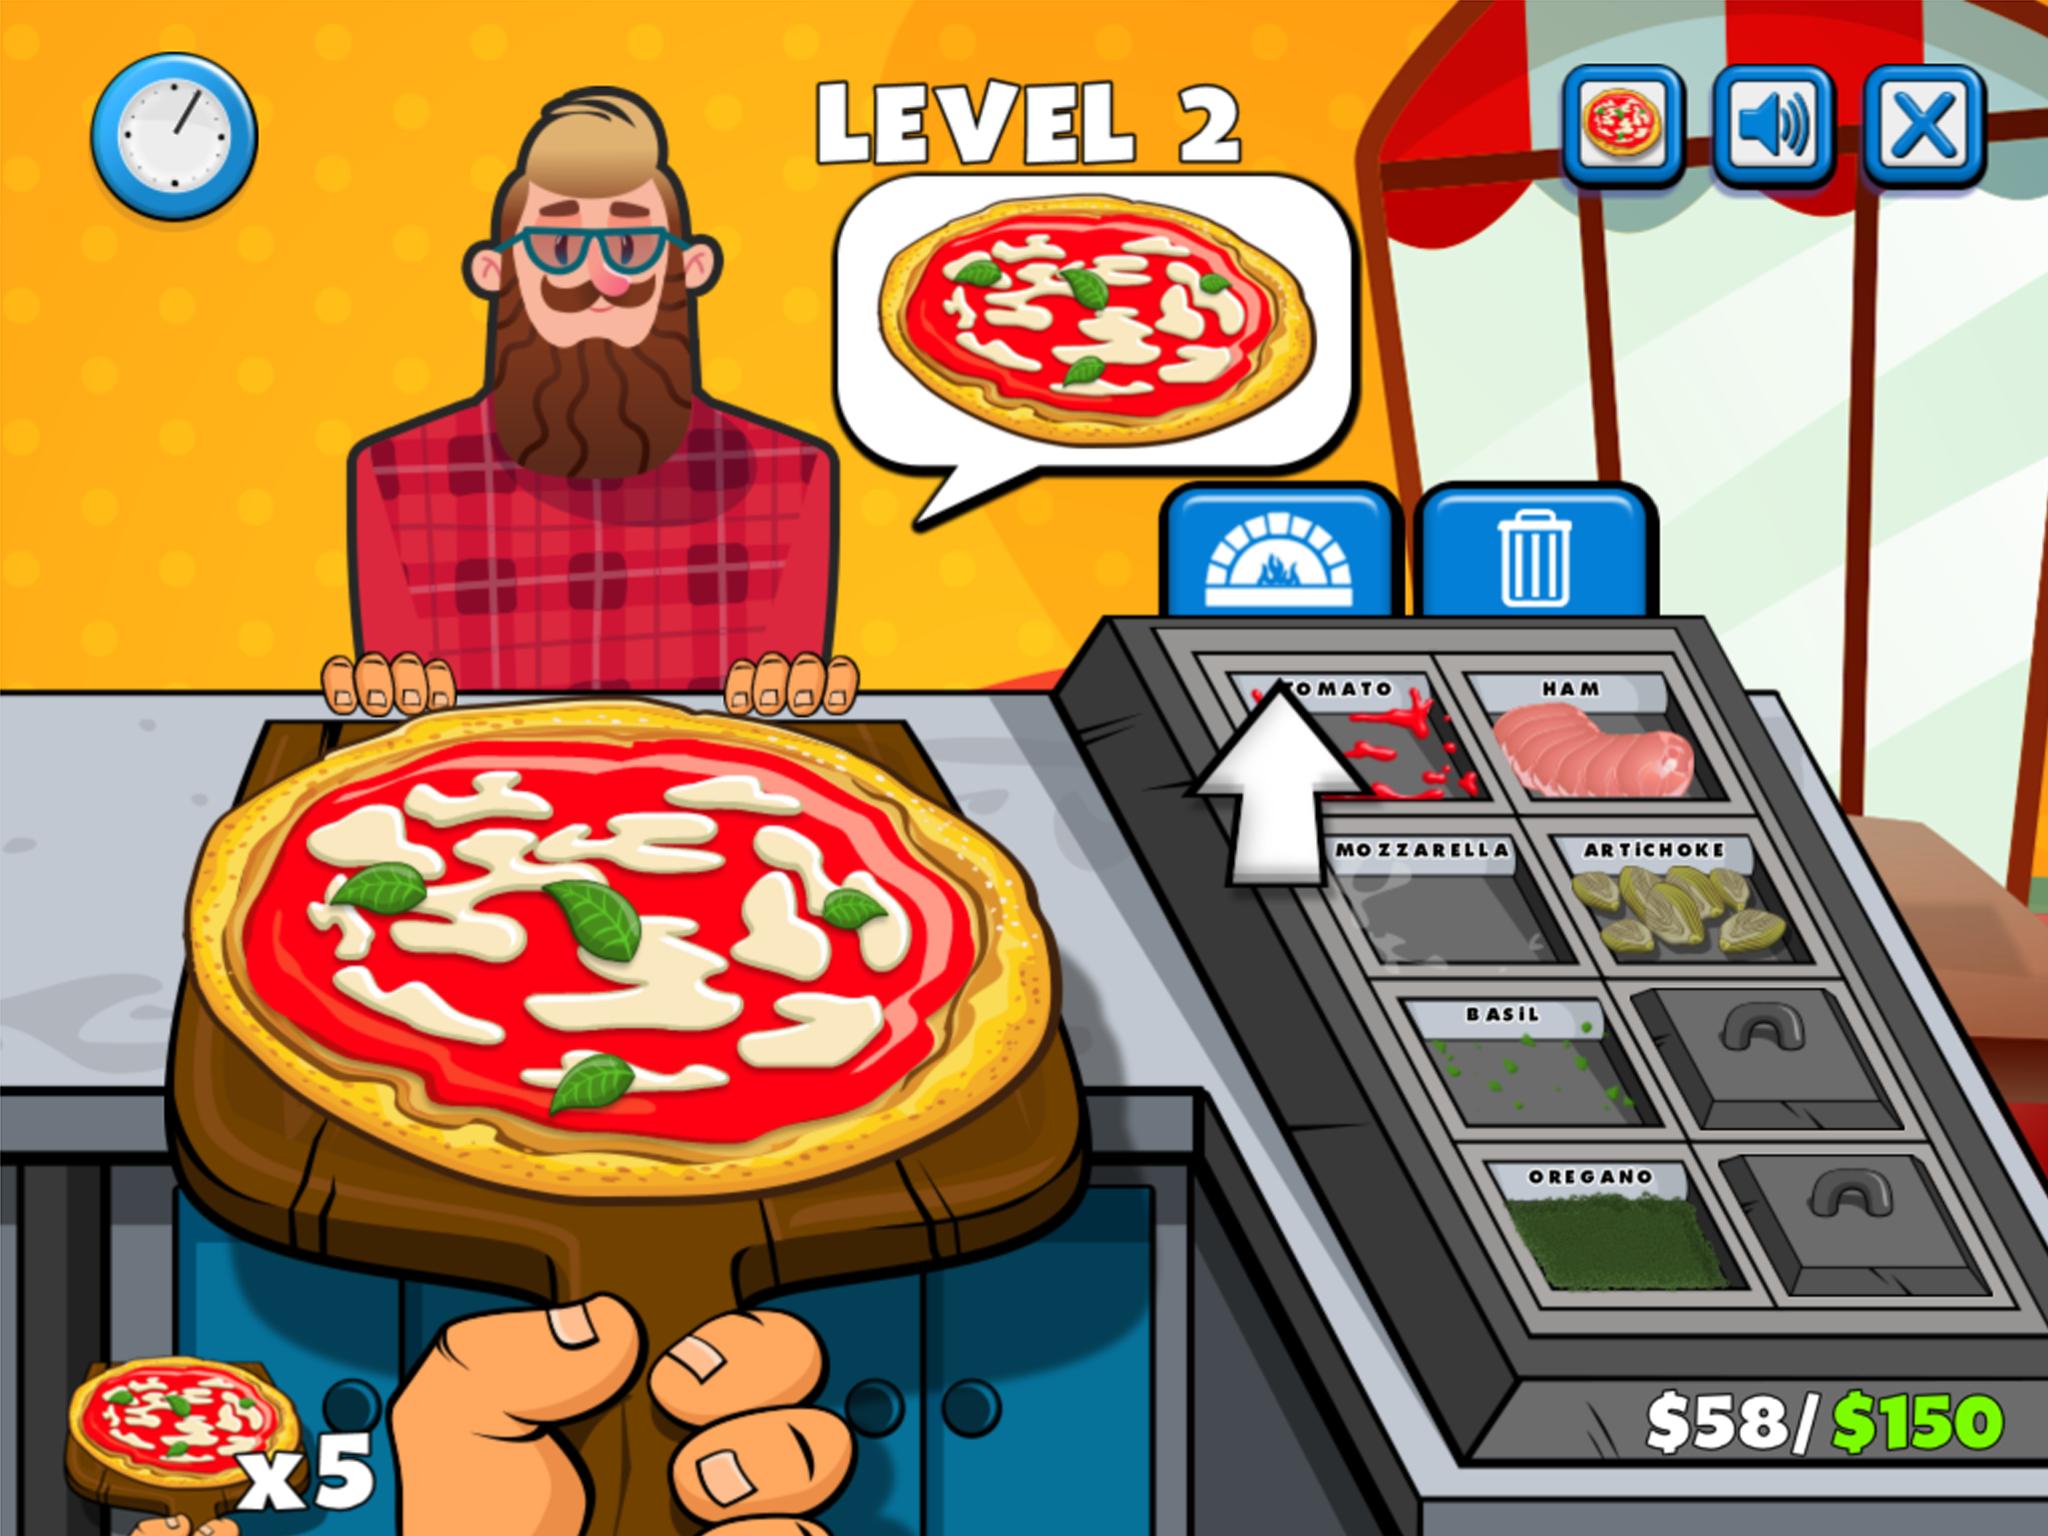 Игру пицца хотите. Игра повар. Хорошая пицца игра. Игра повар пицца. Игра пиццерия повтор.